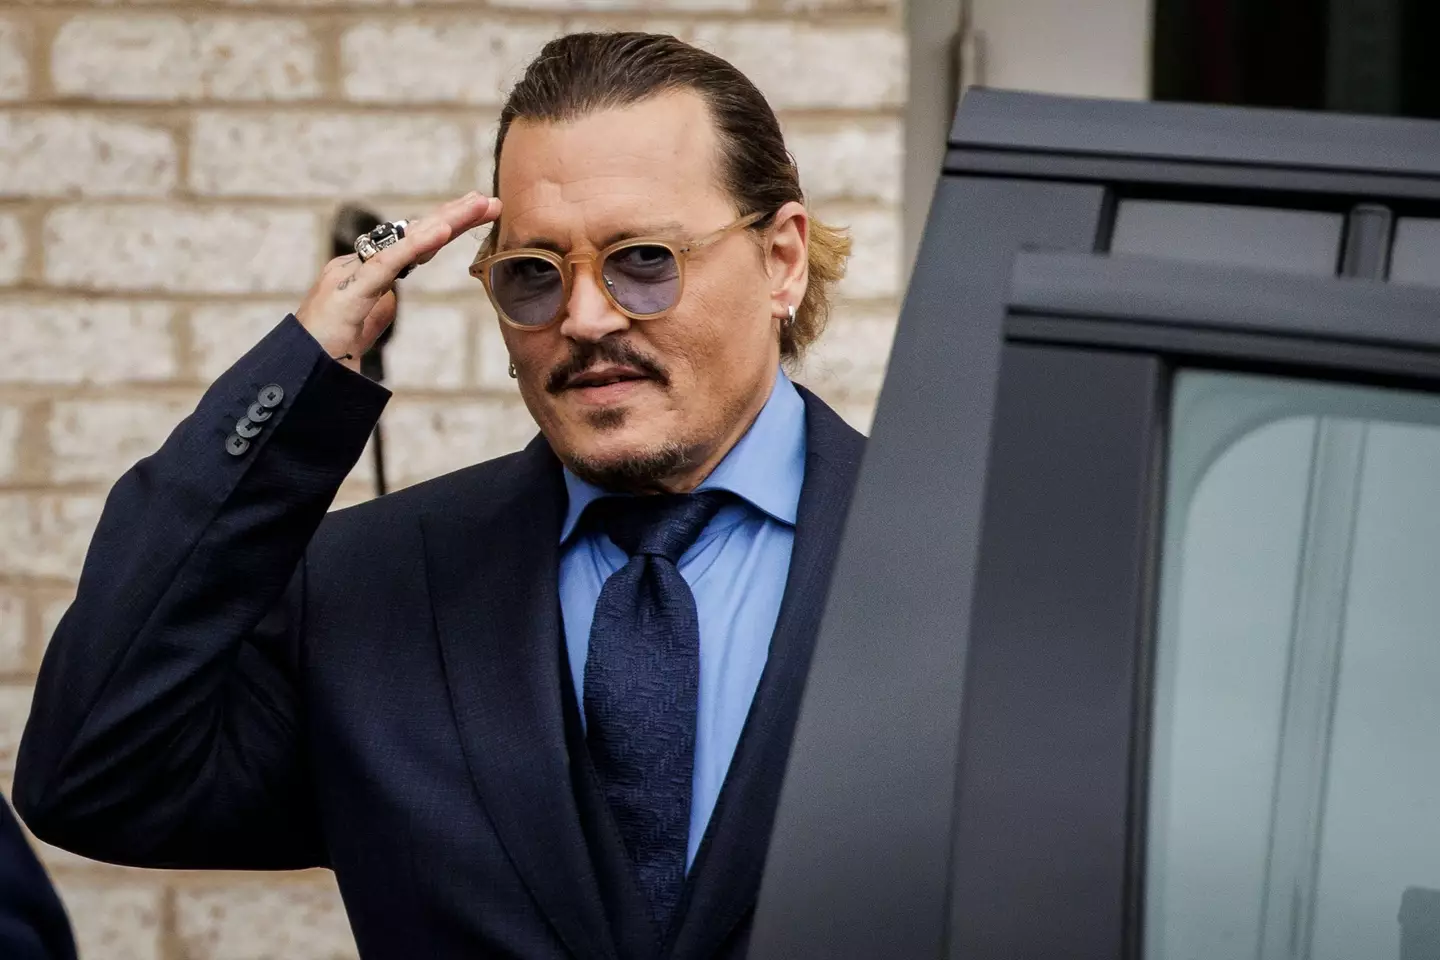 Johnny Depp won the defamation suit against Amber Heard last week.